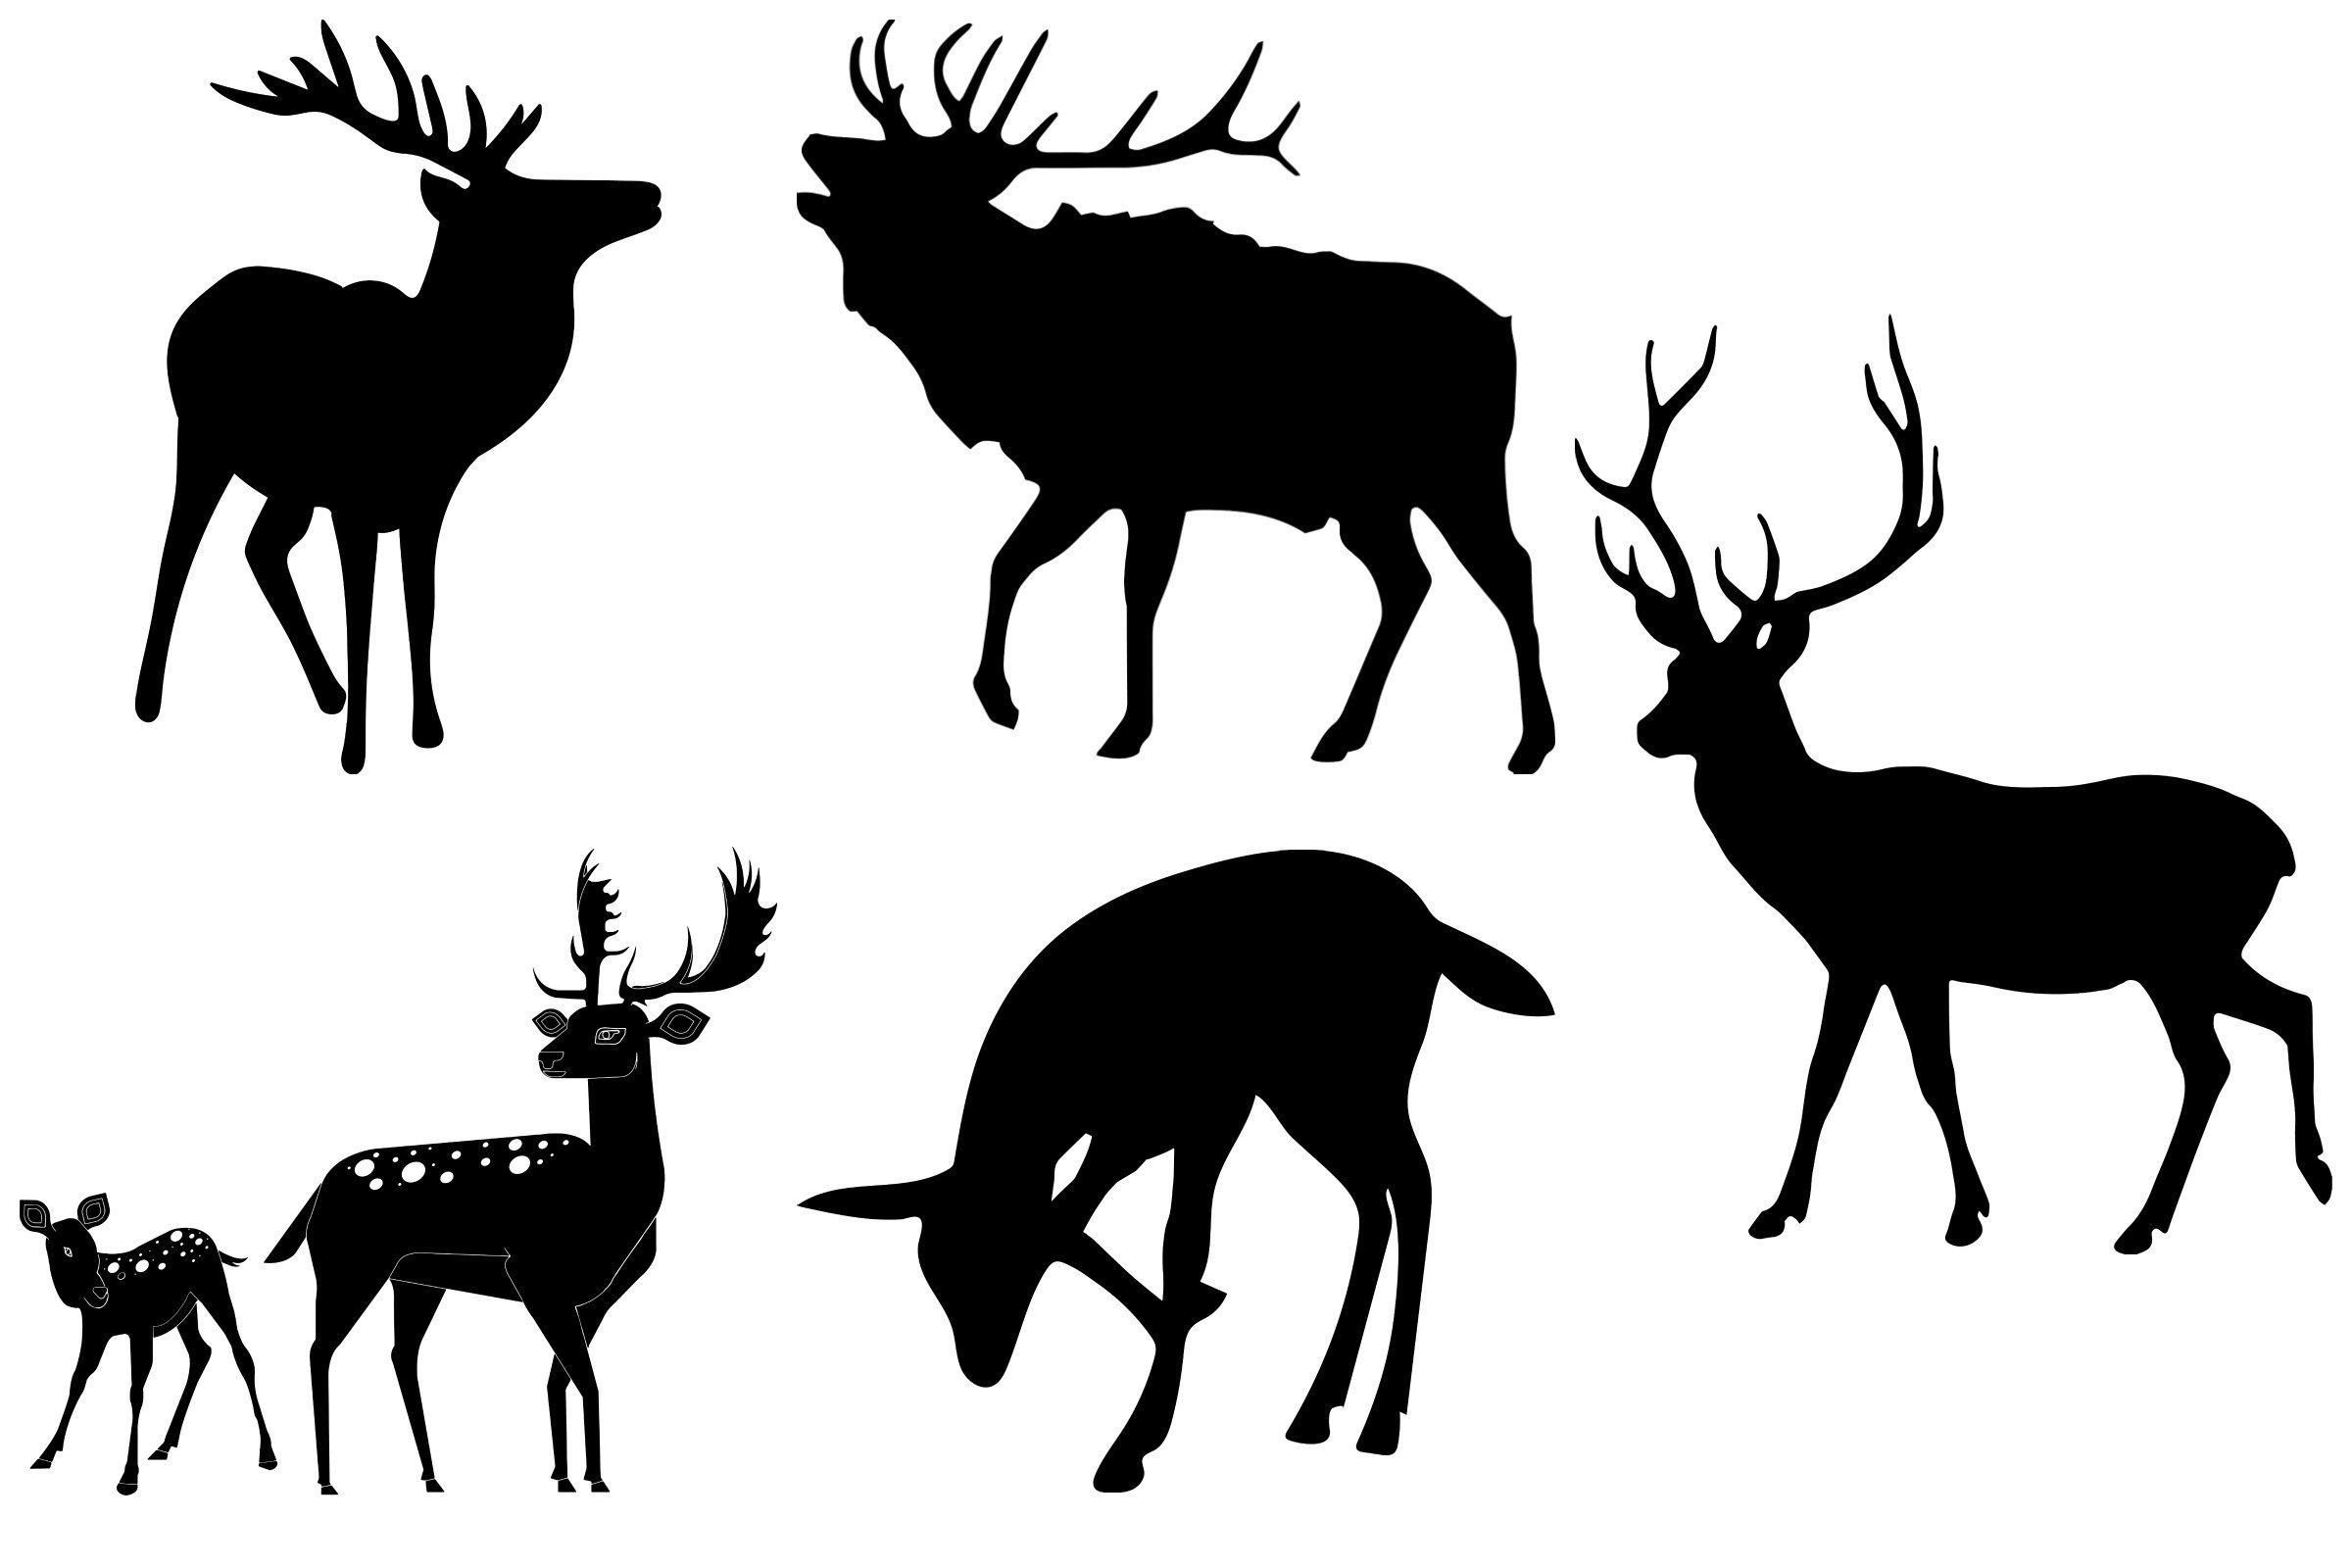 Some big moose for your illustration.